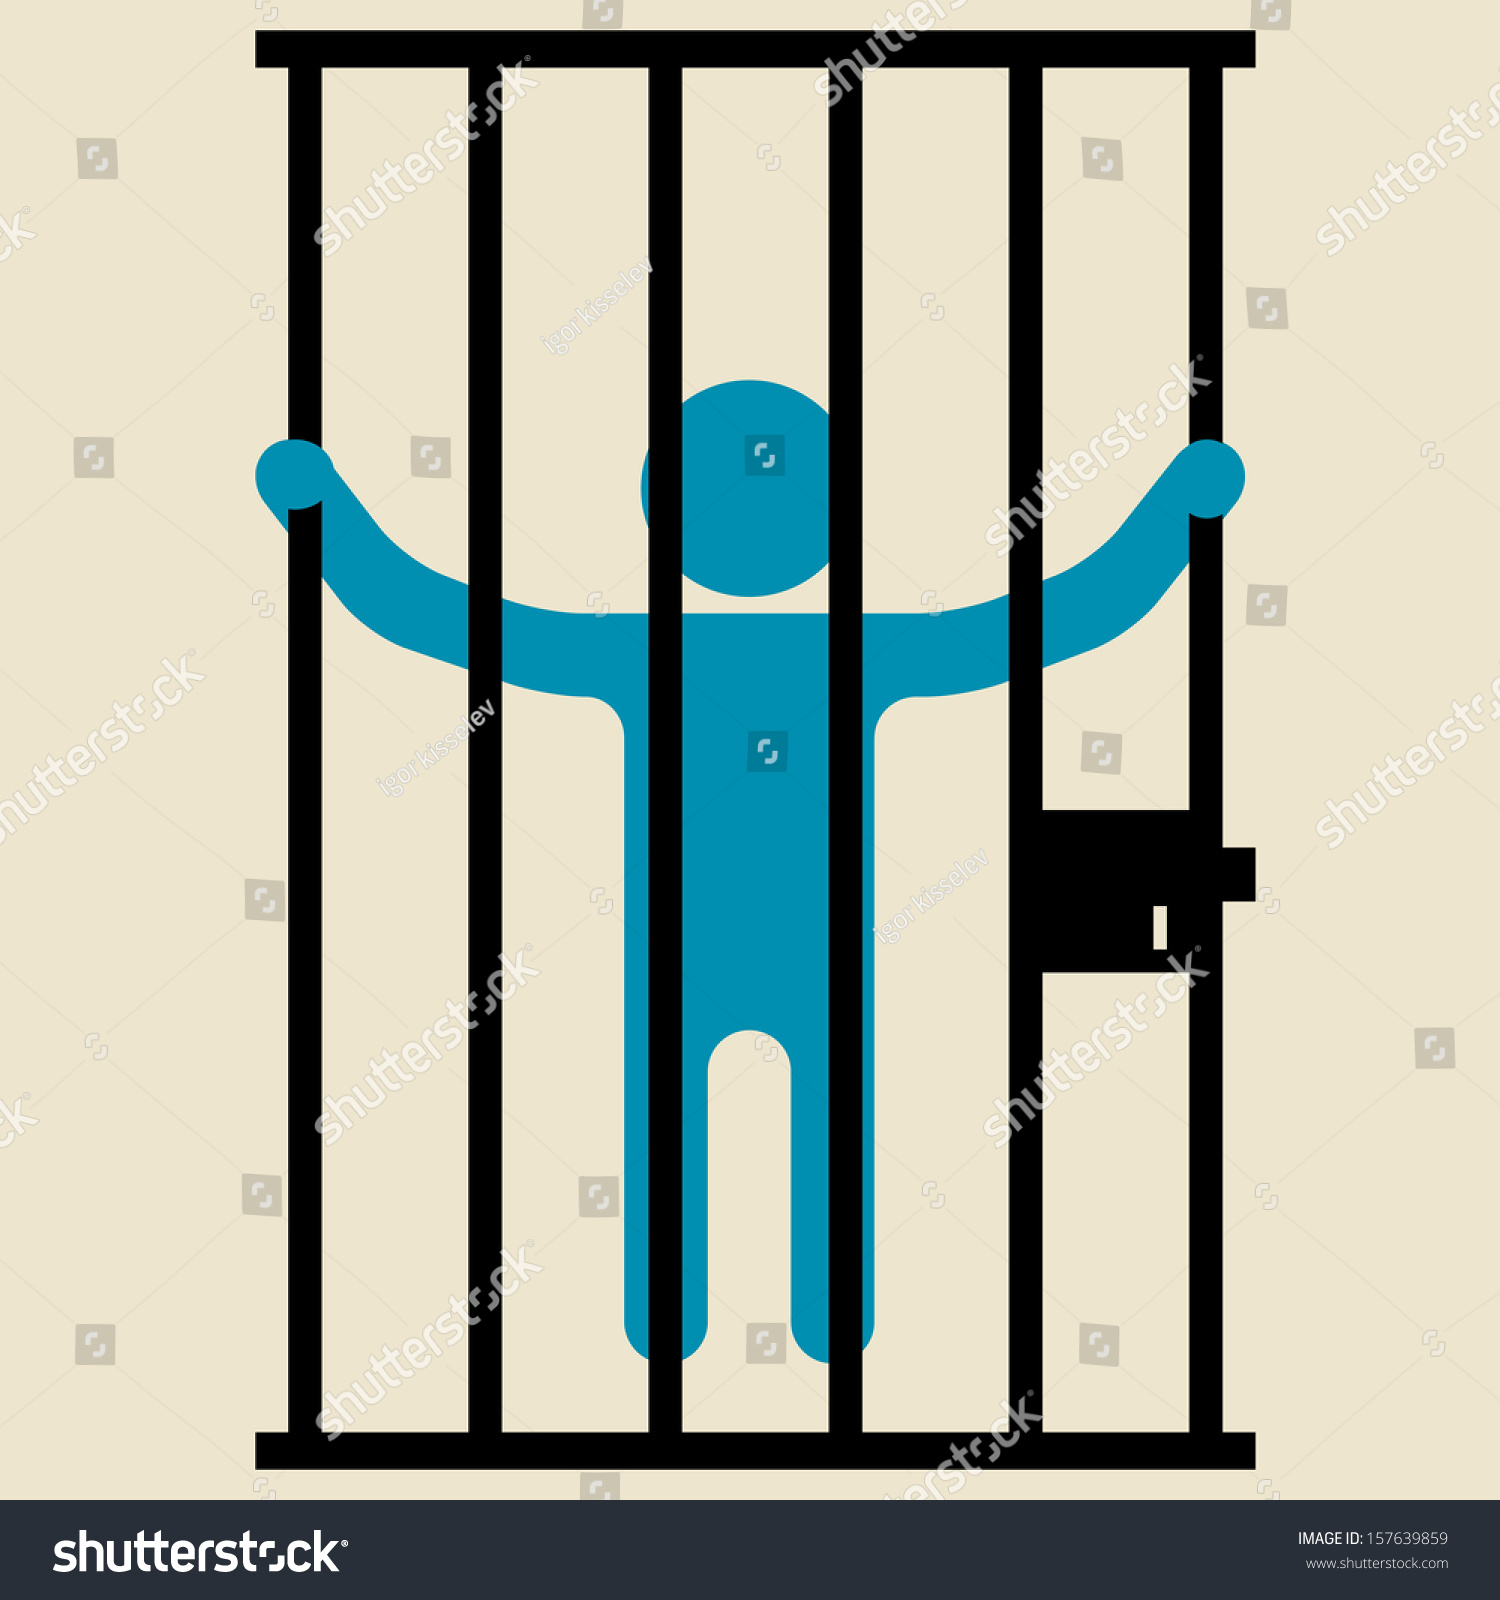 man behind bars clipart - photo #16